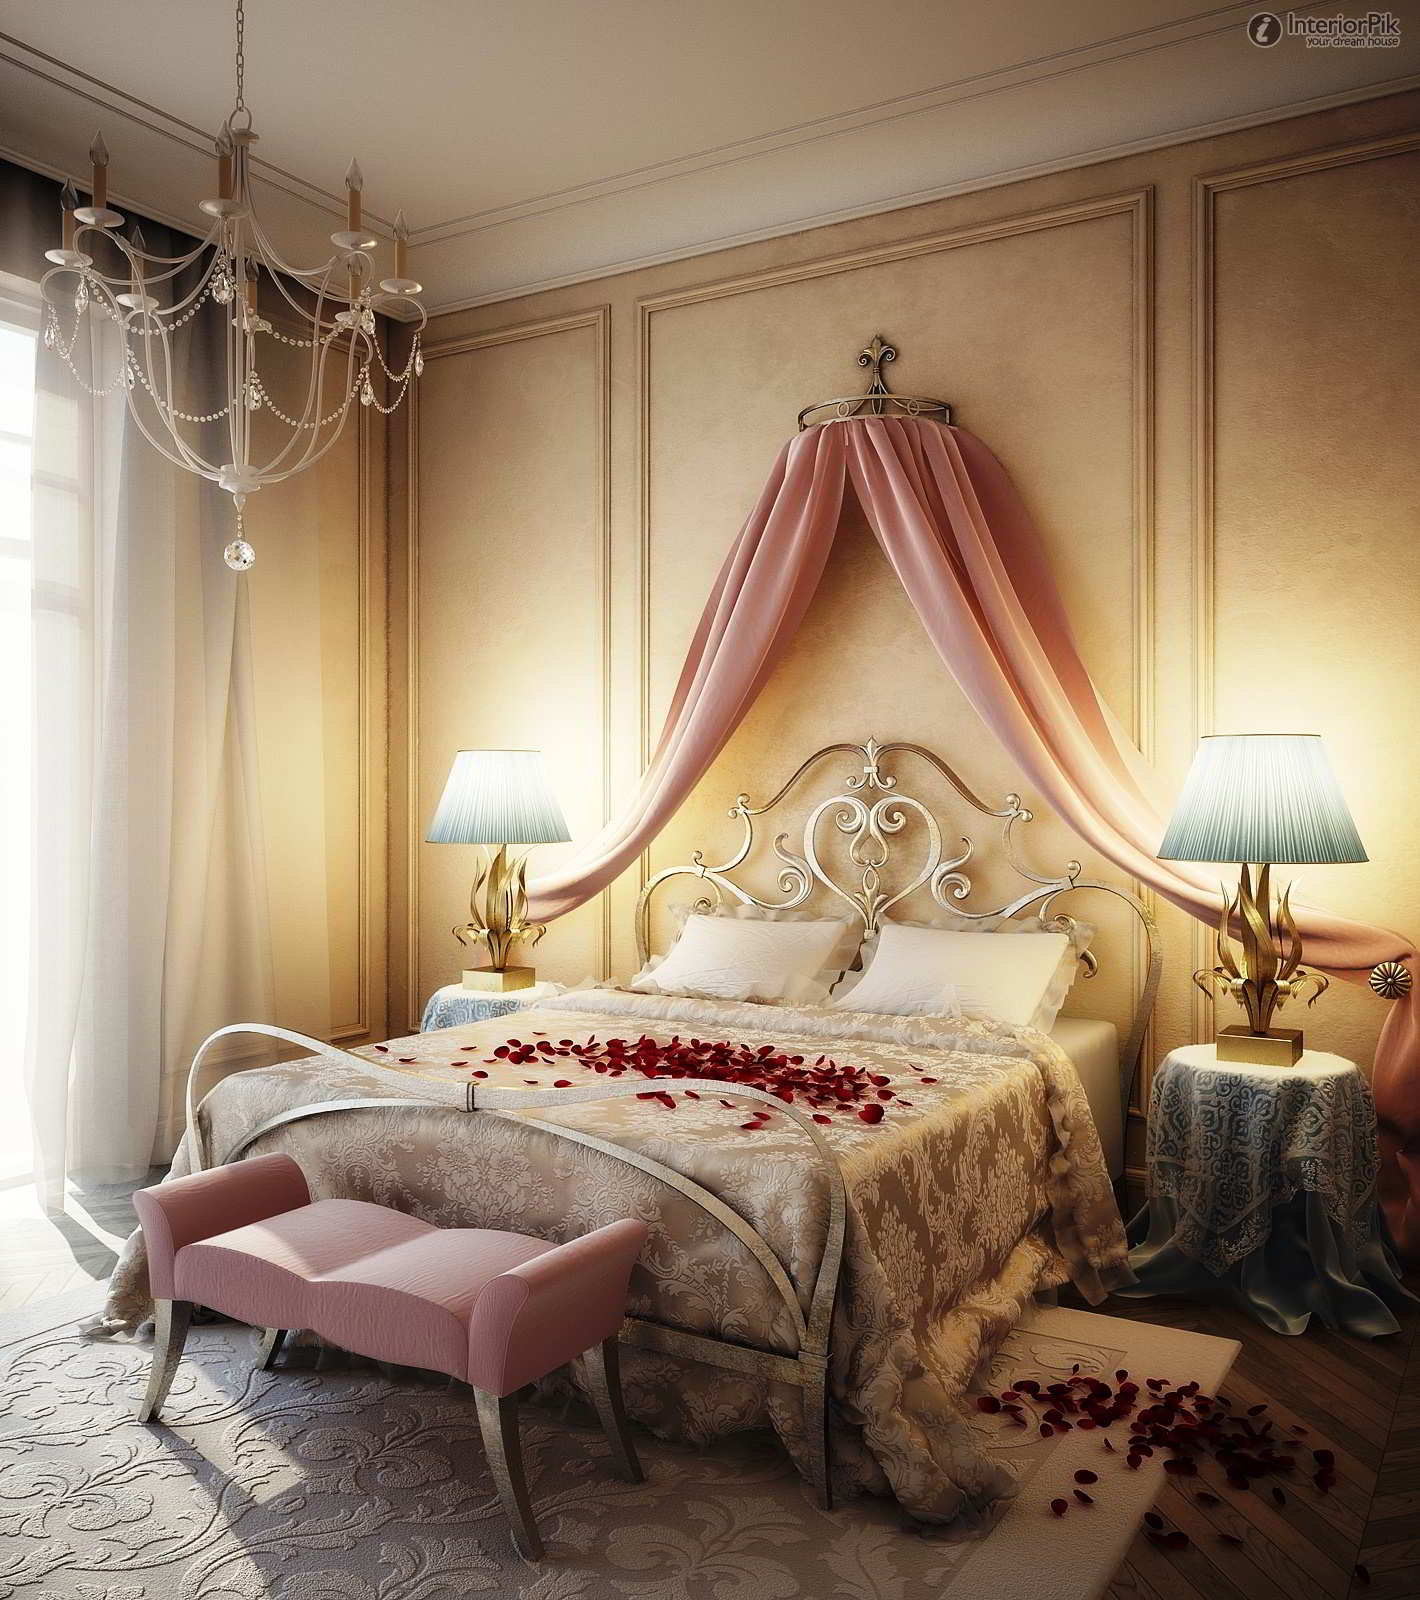 Contoh Dekorasi Kamar Tidur Pengantin Romantis Terbaru | Kamar Tidur Penganti Minimalis Sederhana